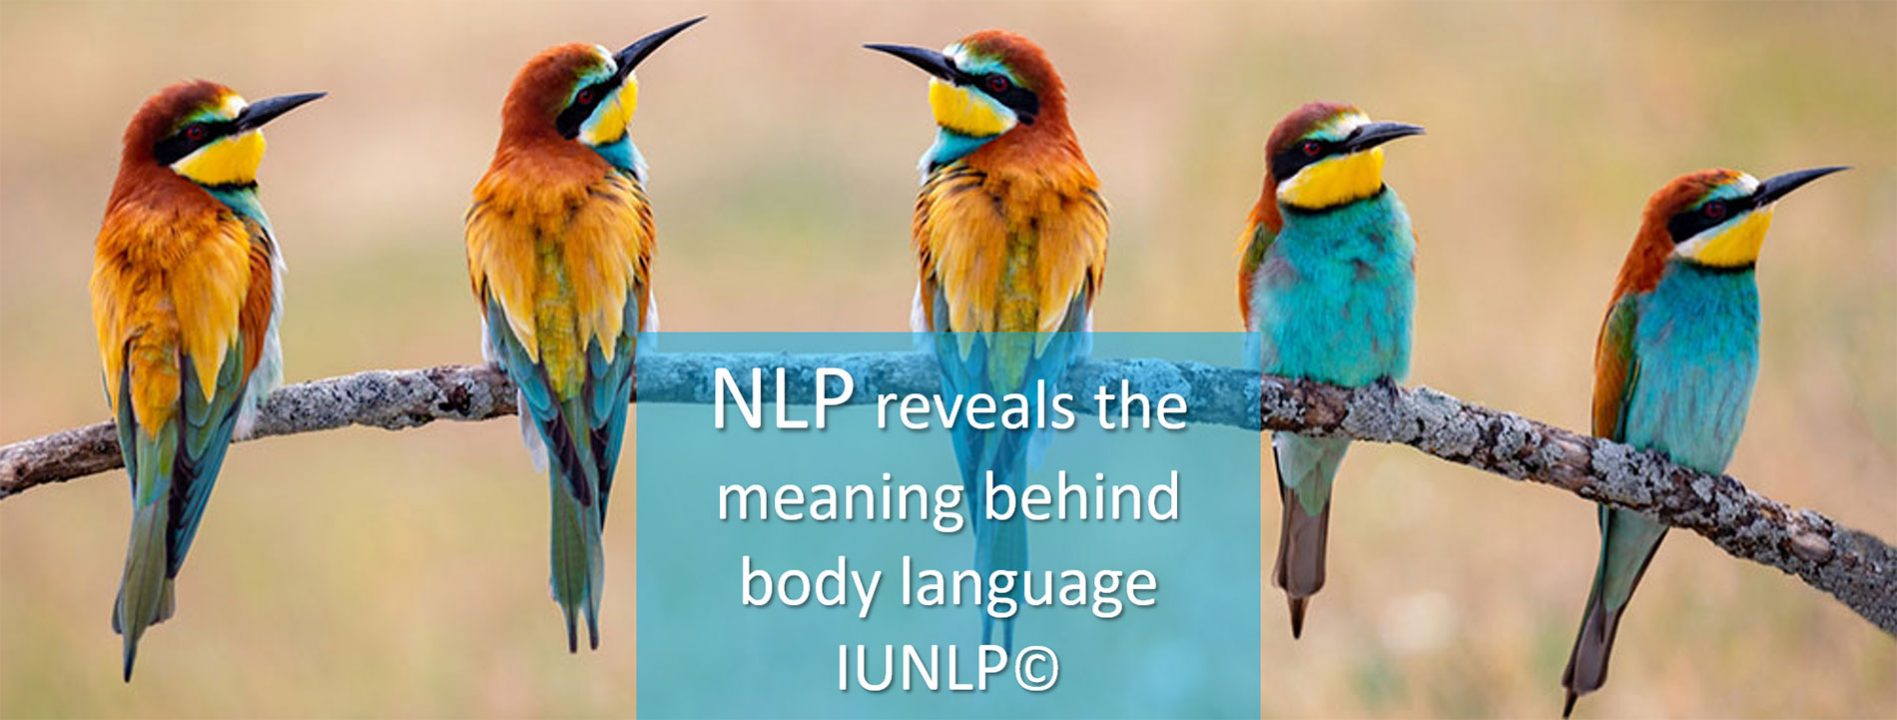 IUNLP NLP training and certification